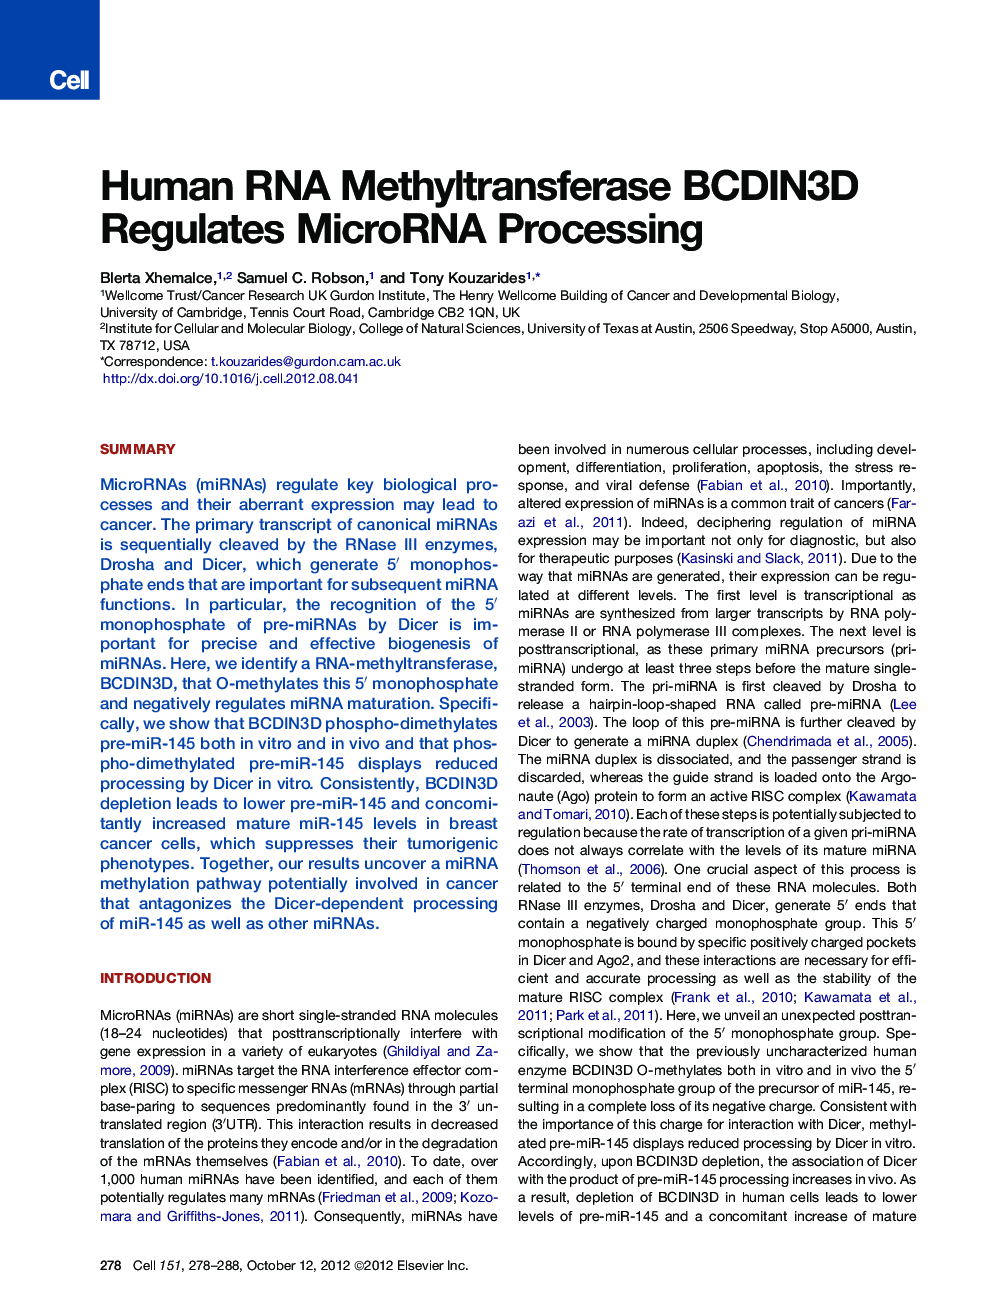 Human RNA Methyltransferase BCDIN3D Regulates MicroRNA Processing